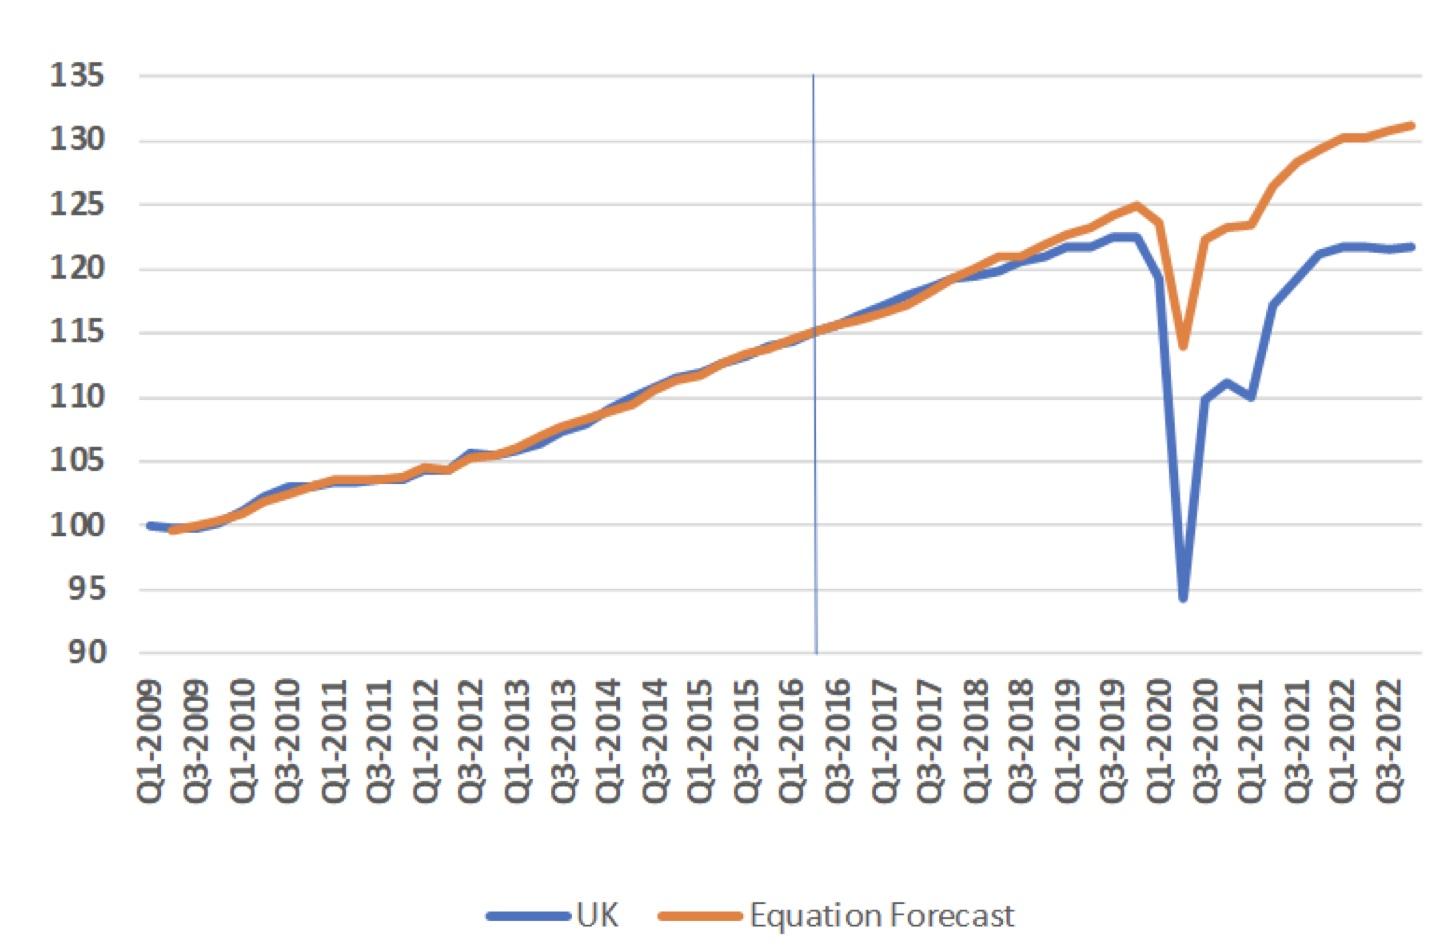 Figure 2 UK GDP vs ECM forecast (Gudgin and Lu methodology)